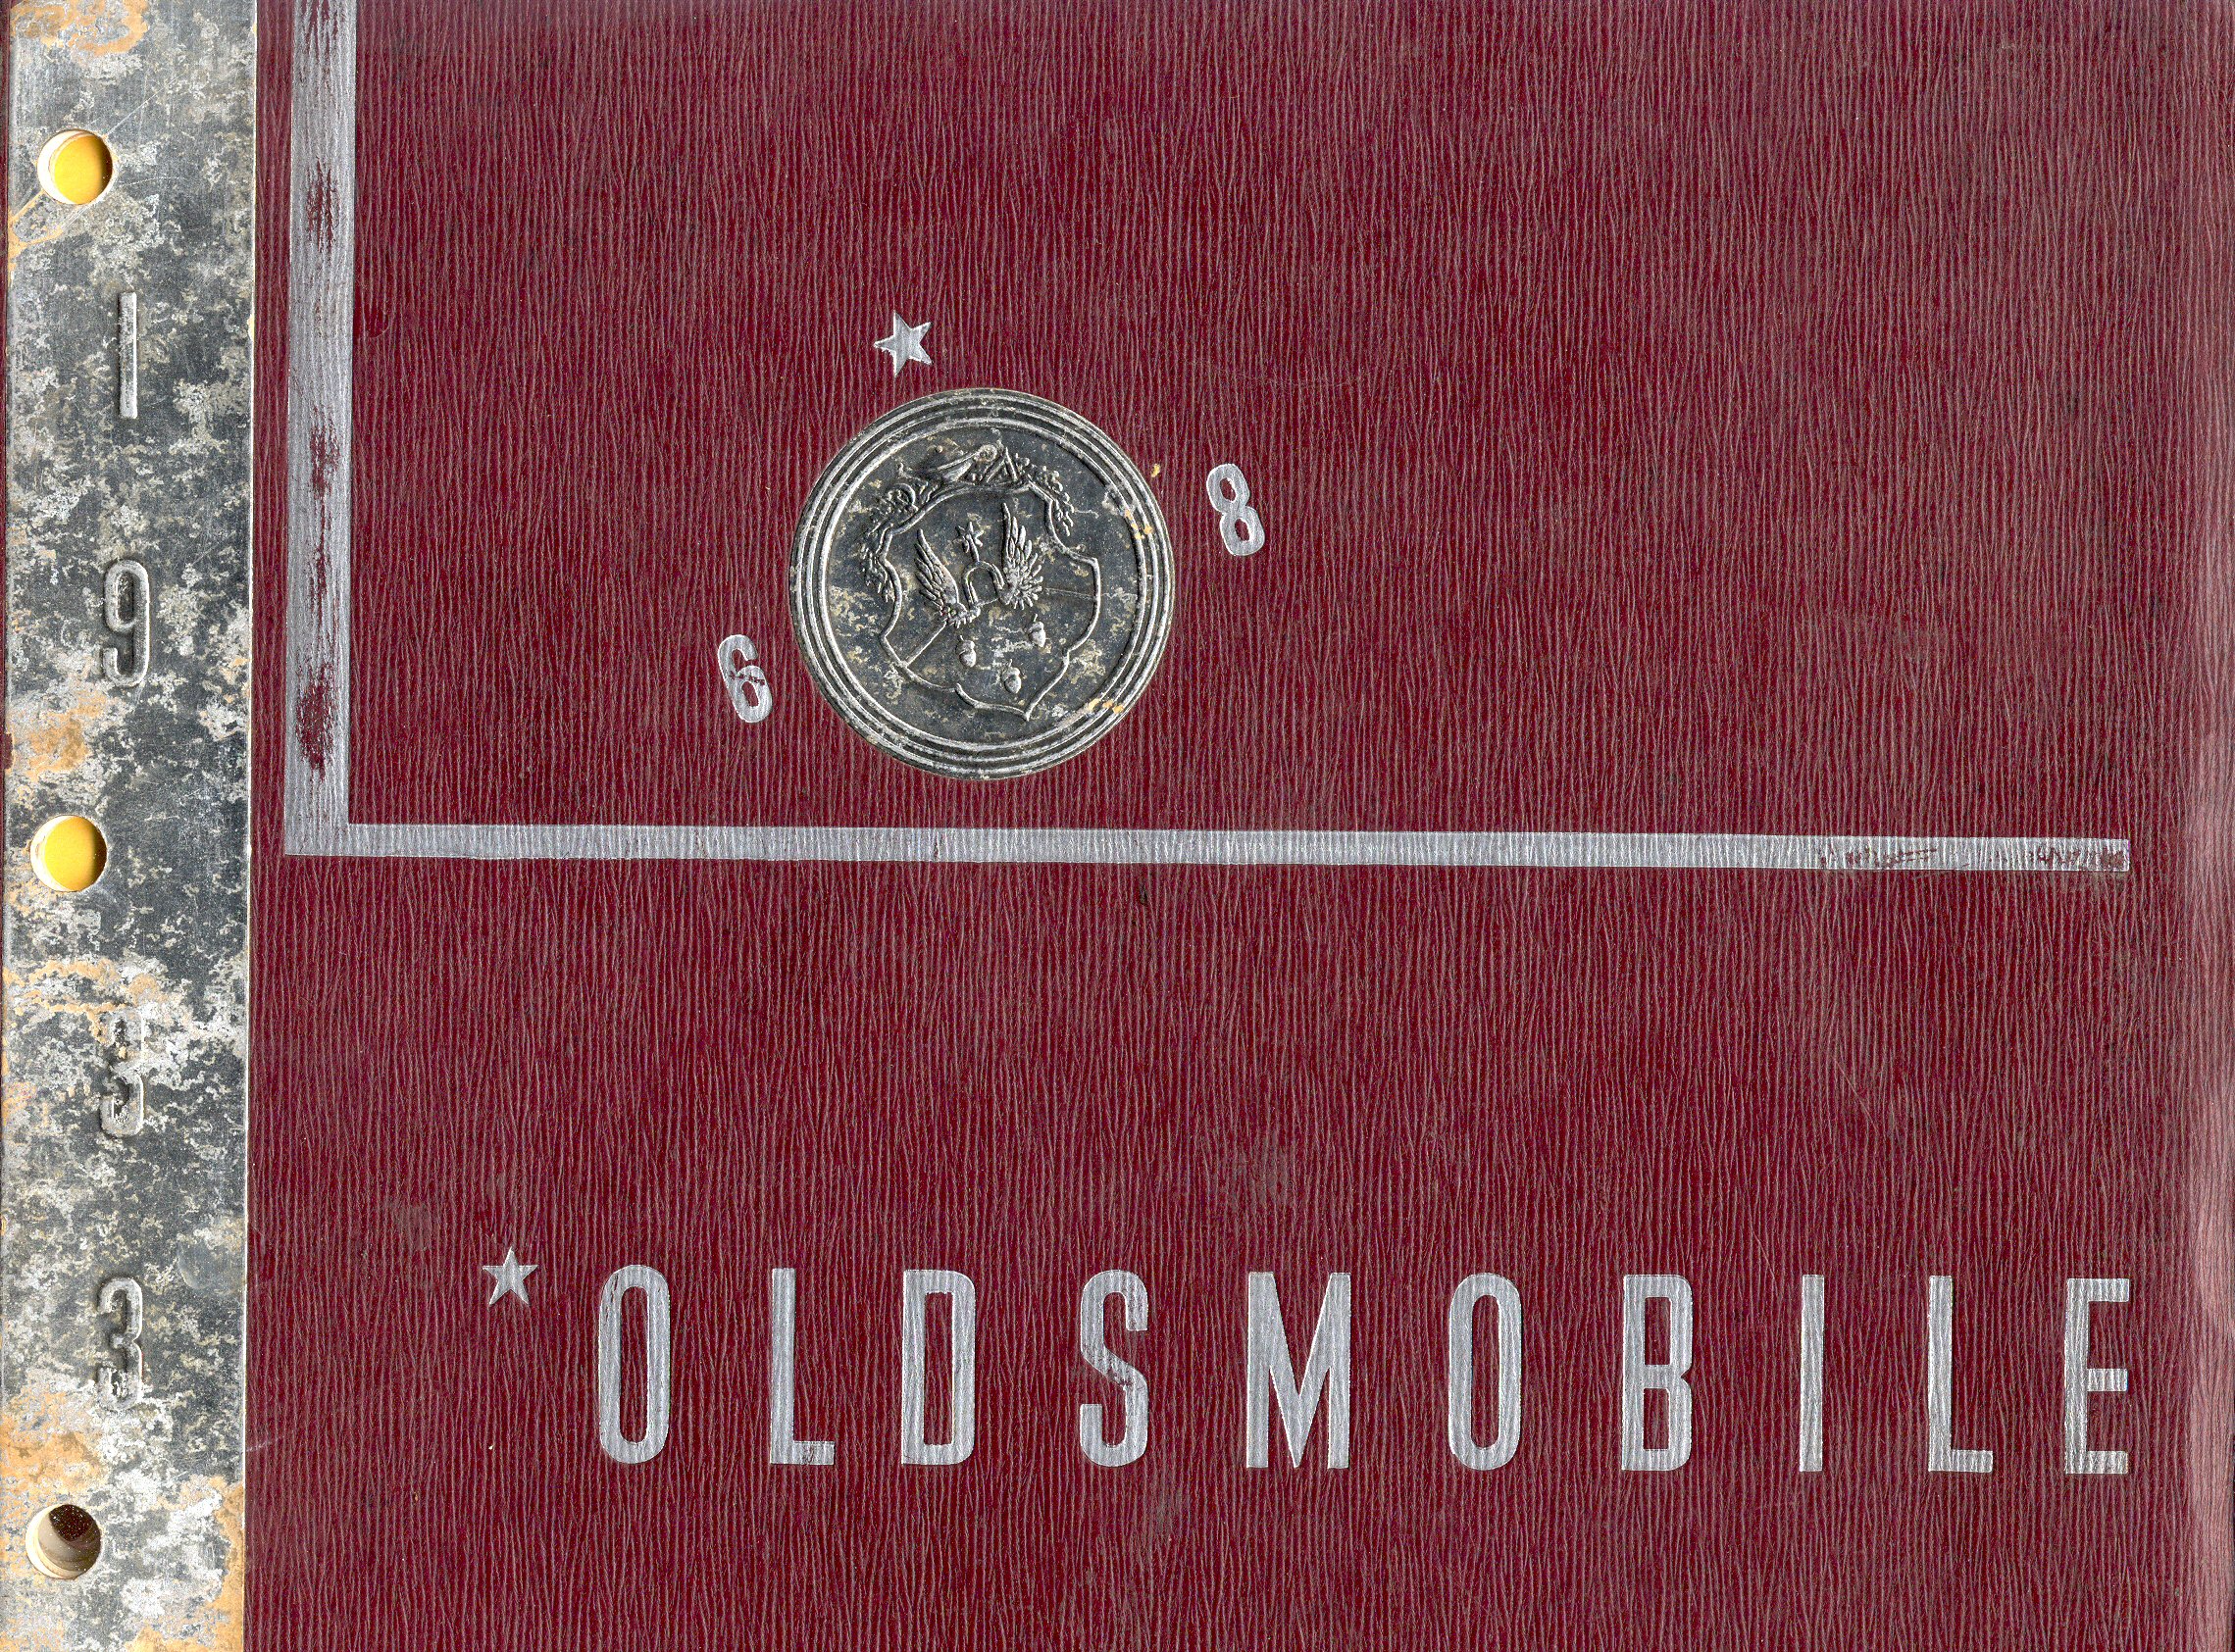 1933 Oldsmobile Motor Cars Booklet Page 28